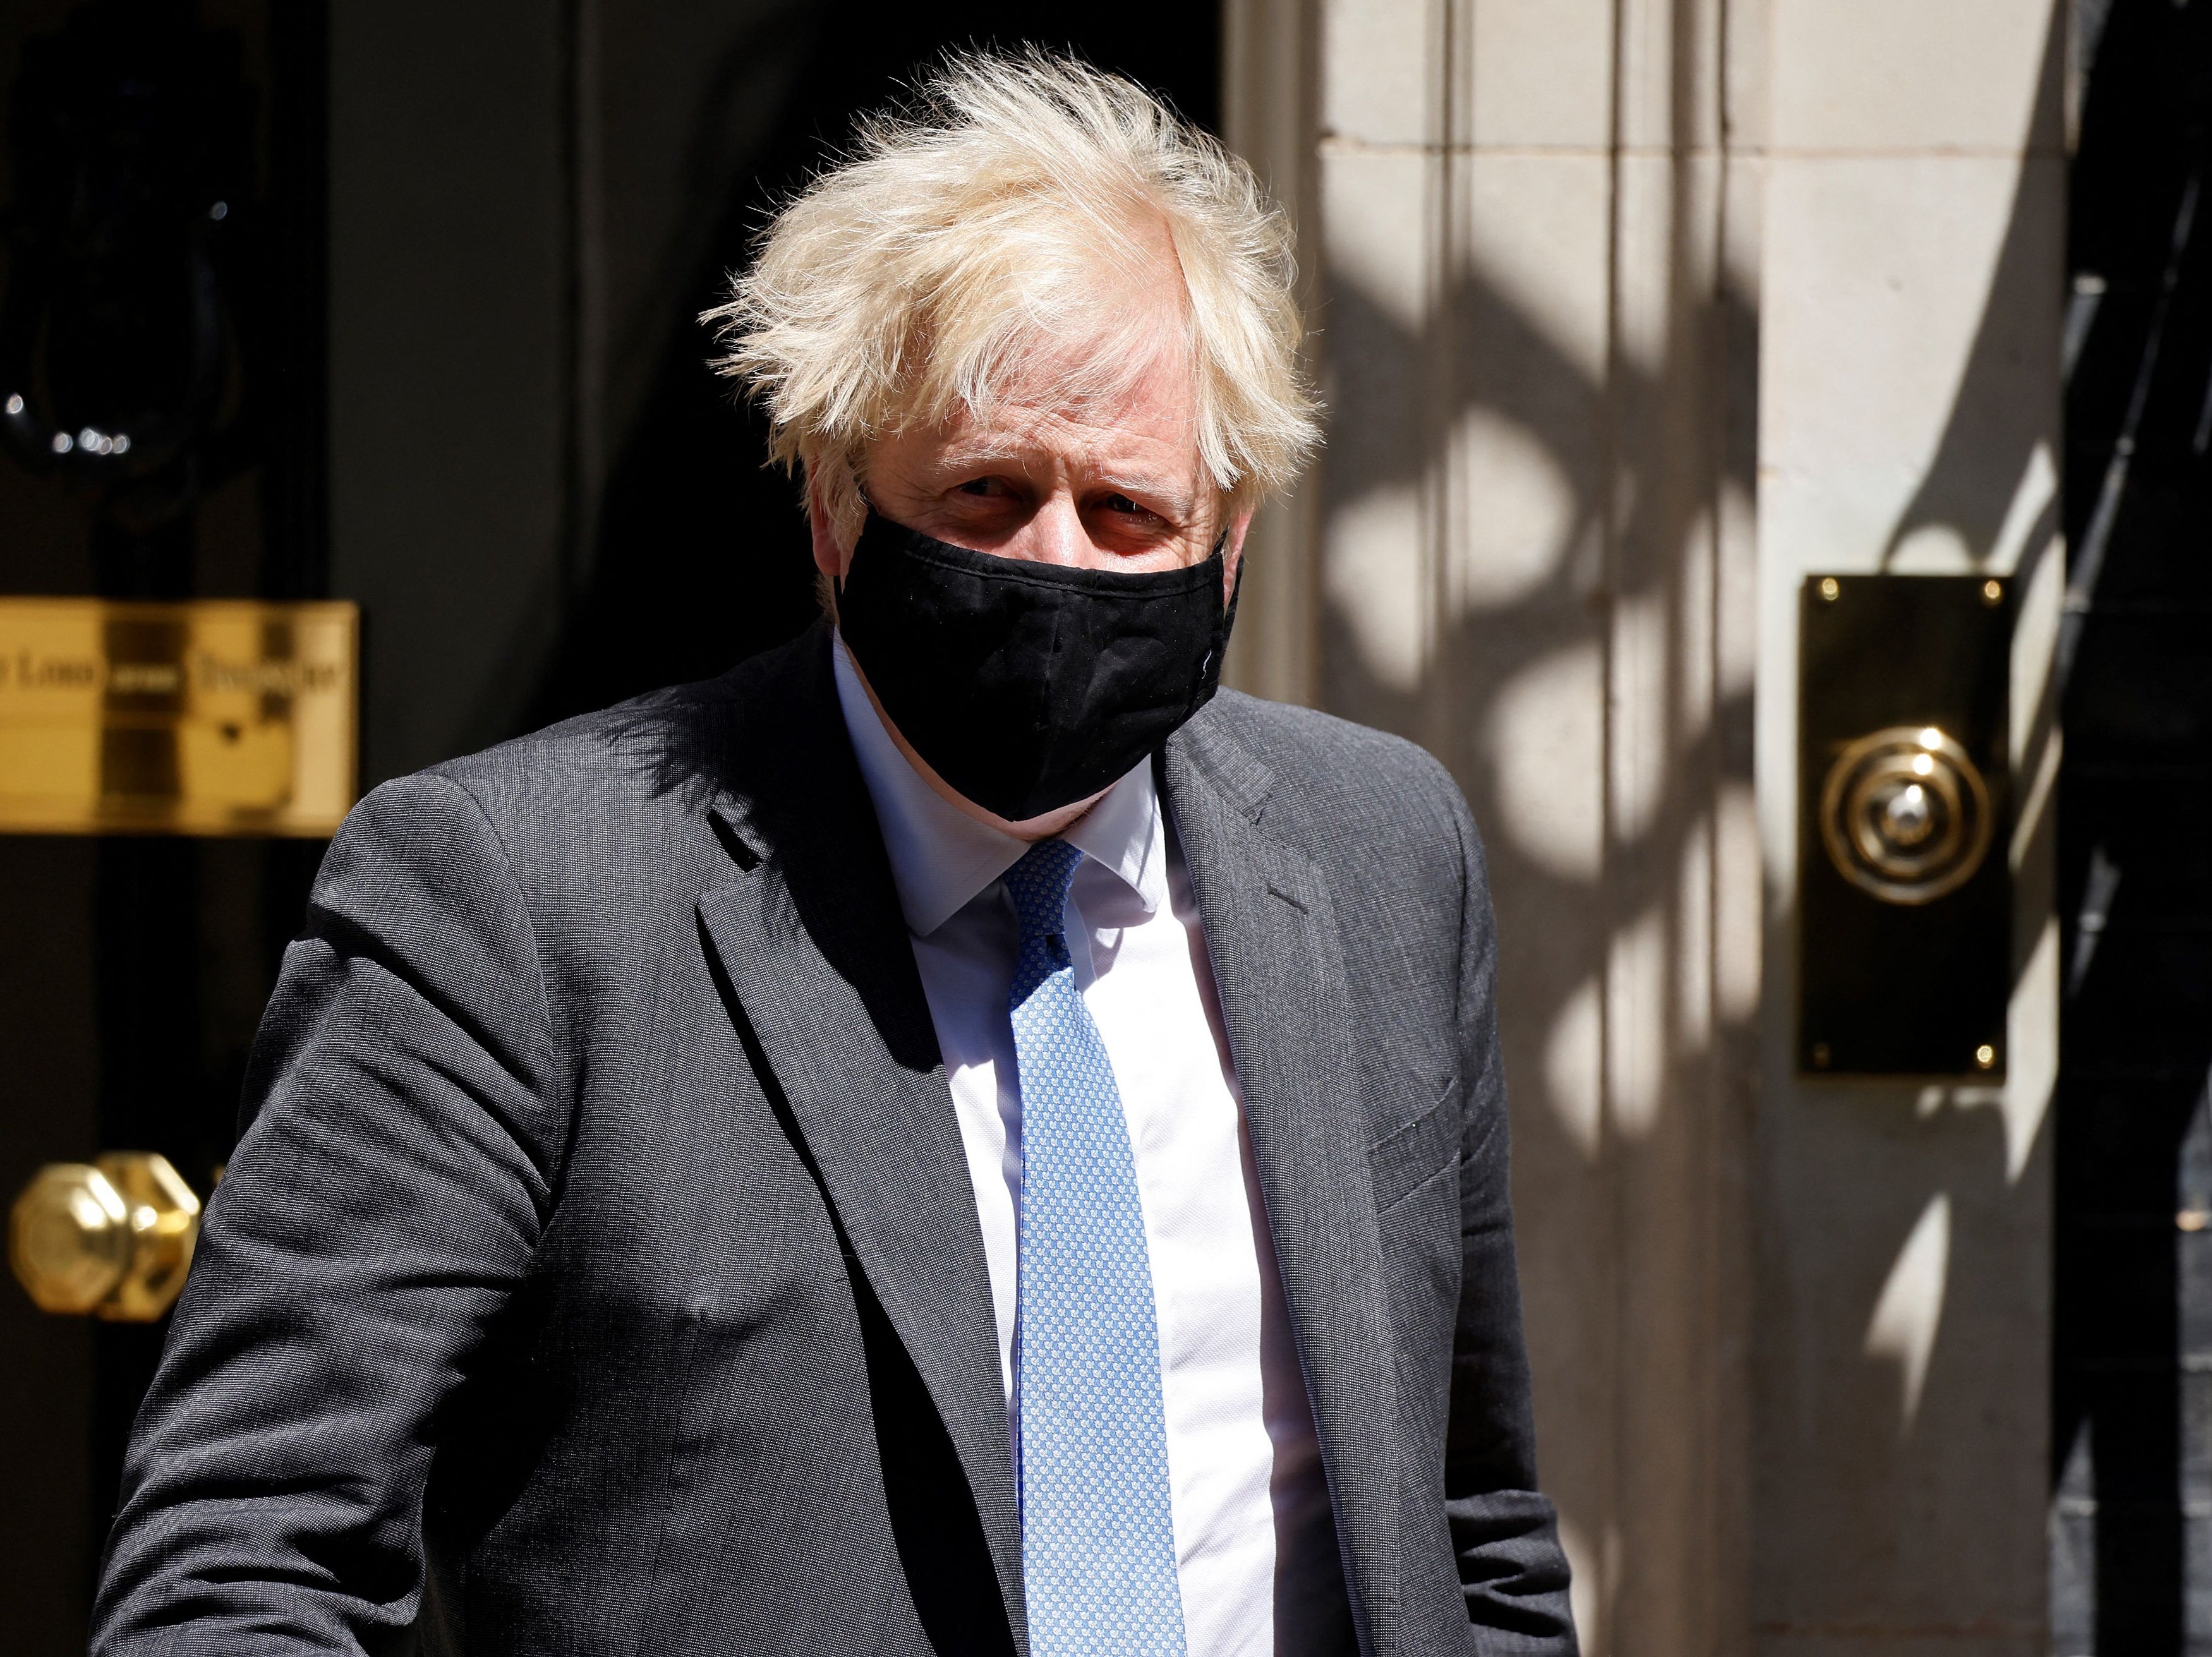 Johnson wears a mask as he exits No 10